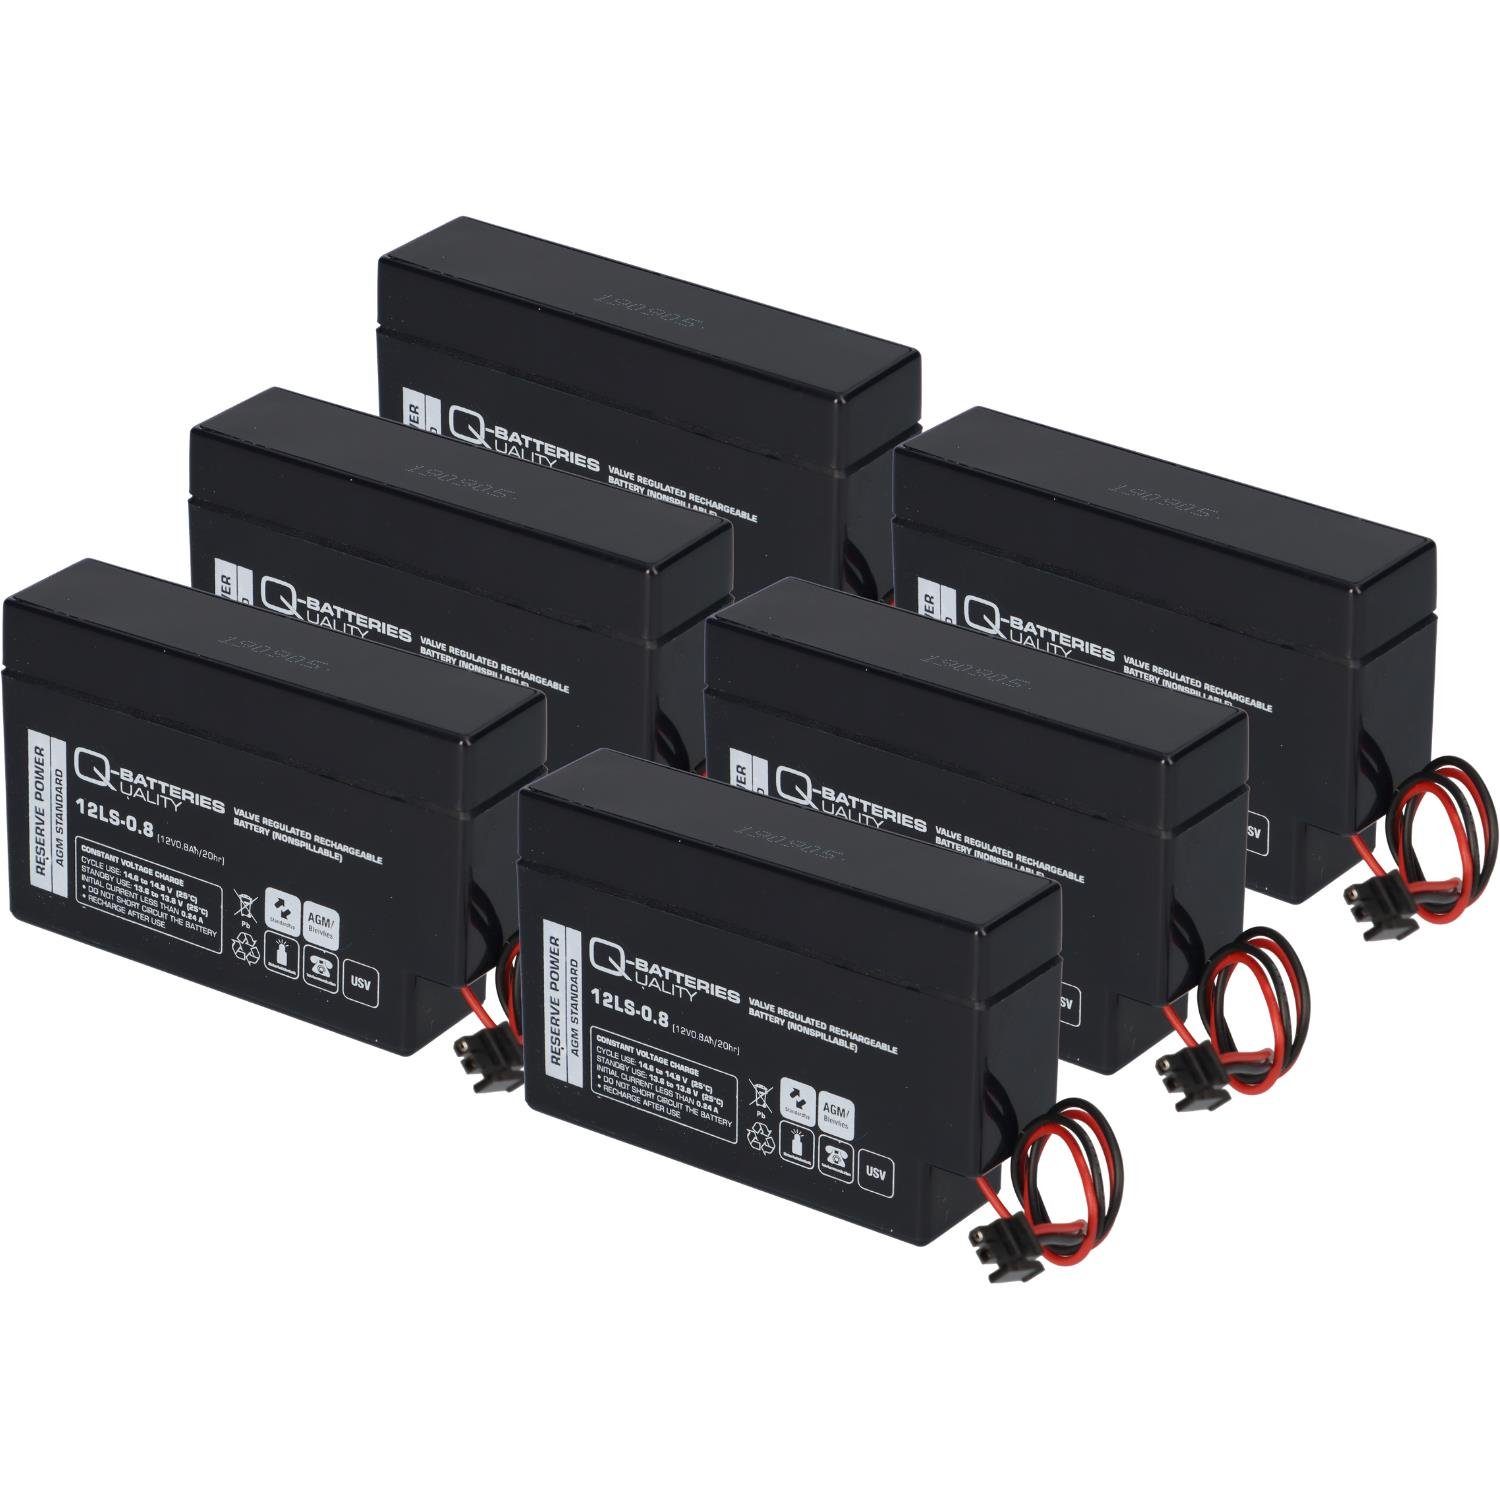 Q-Batteries 6x Q-Batteries 12LS-0.8 12V 0,8Ah AGM Blei-Vlies Akku Heim & Haus Bleiakkus